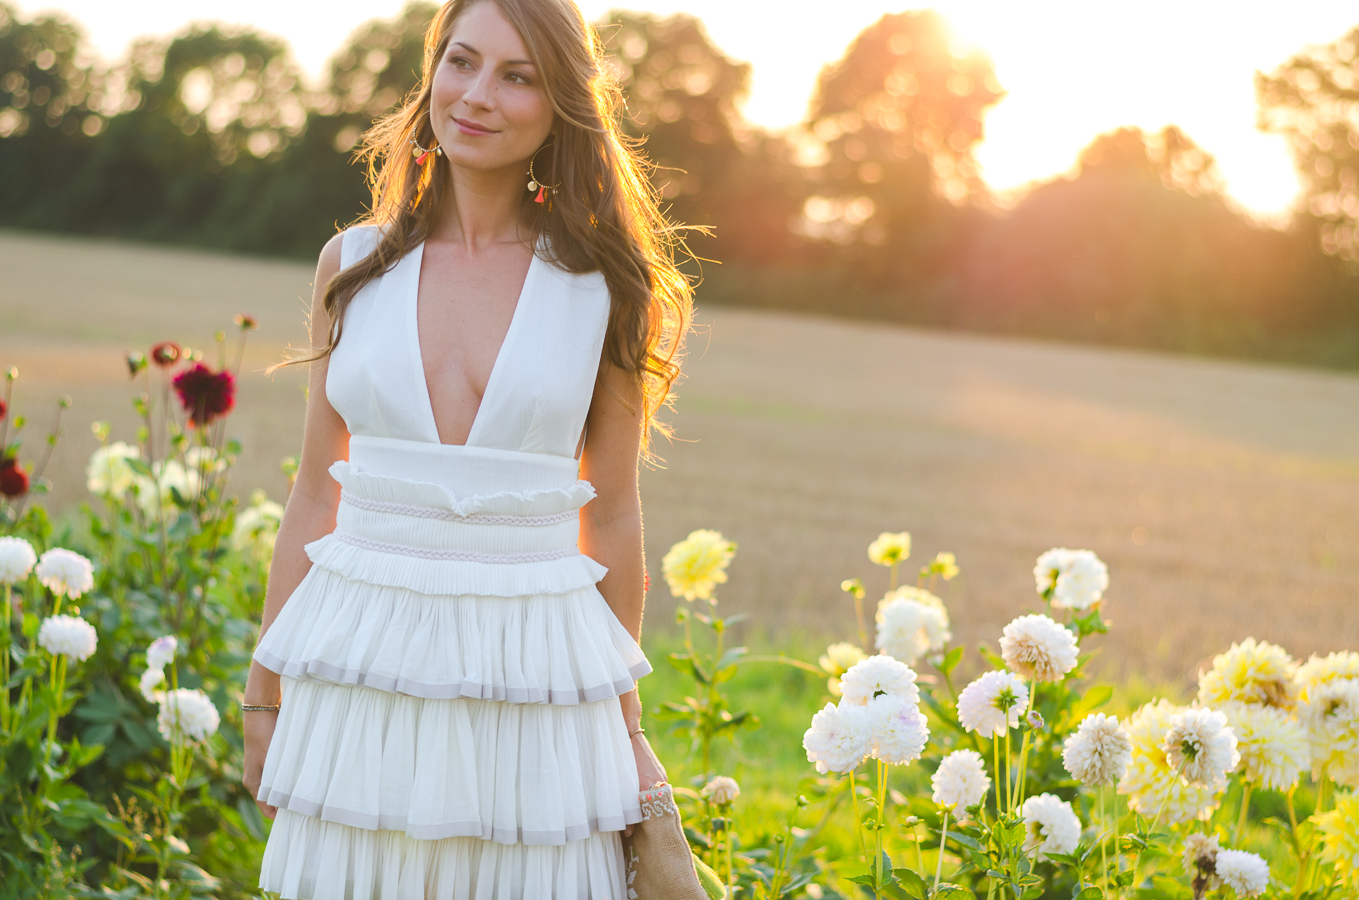 isabel marant dress bohemian v-neck summer outfit